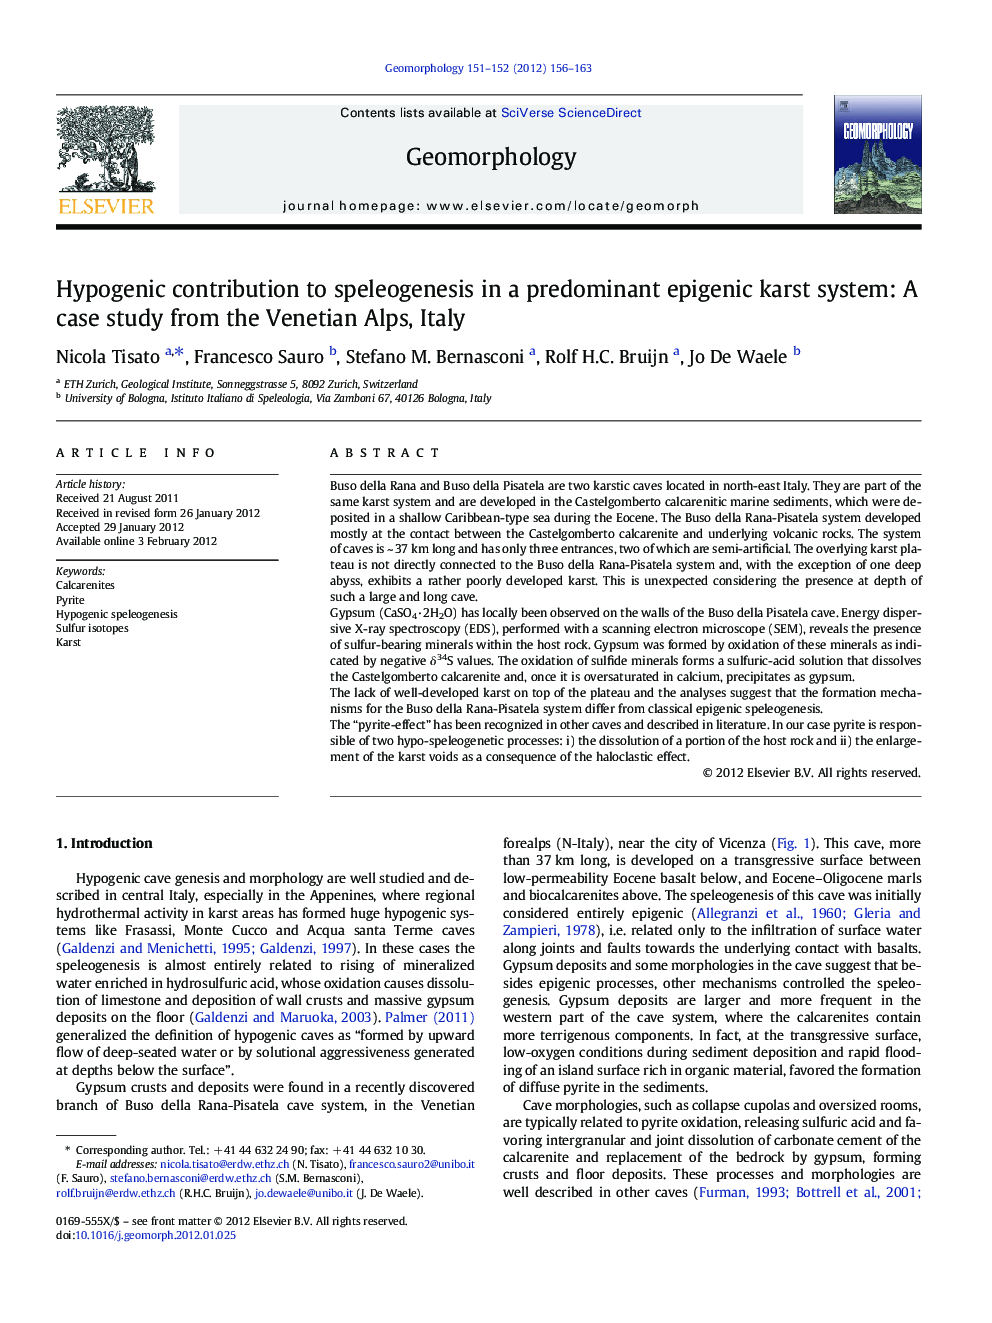 Hypogenic contribution to speleogenesis in a predominant epigenic karst system: A case study from the Venetian Alps, Italy